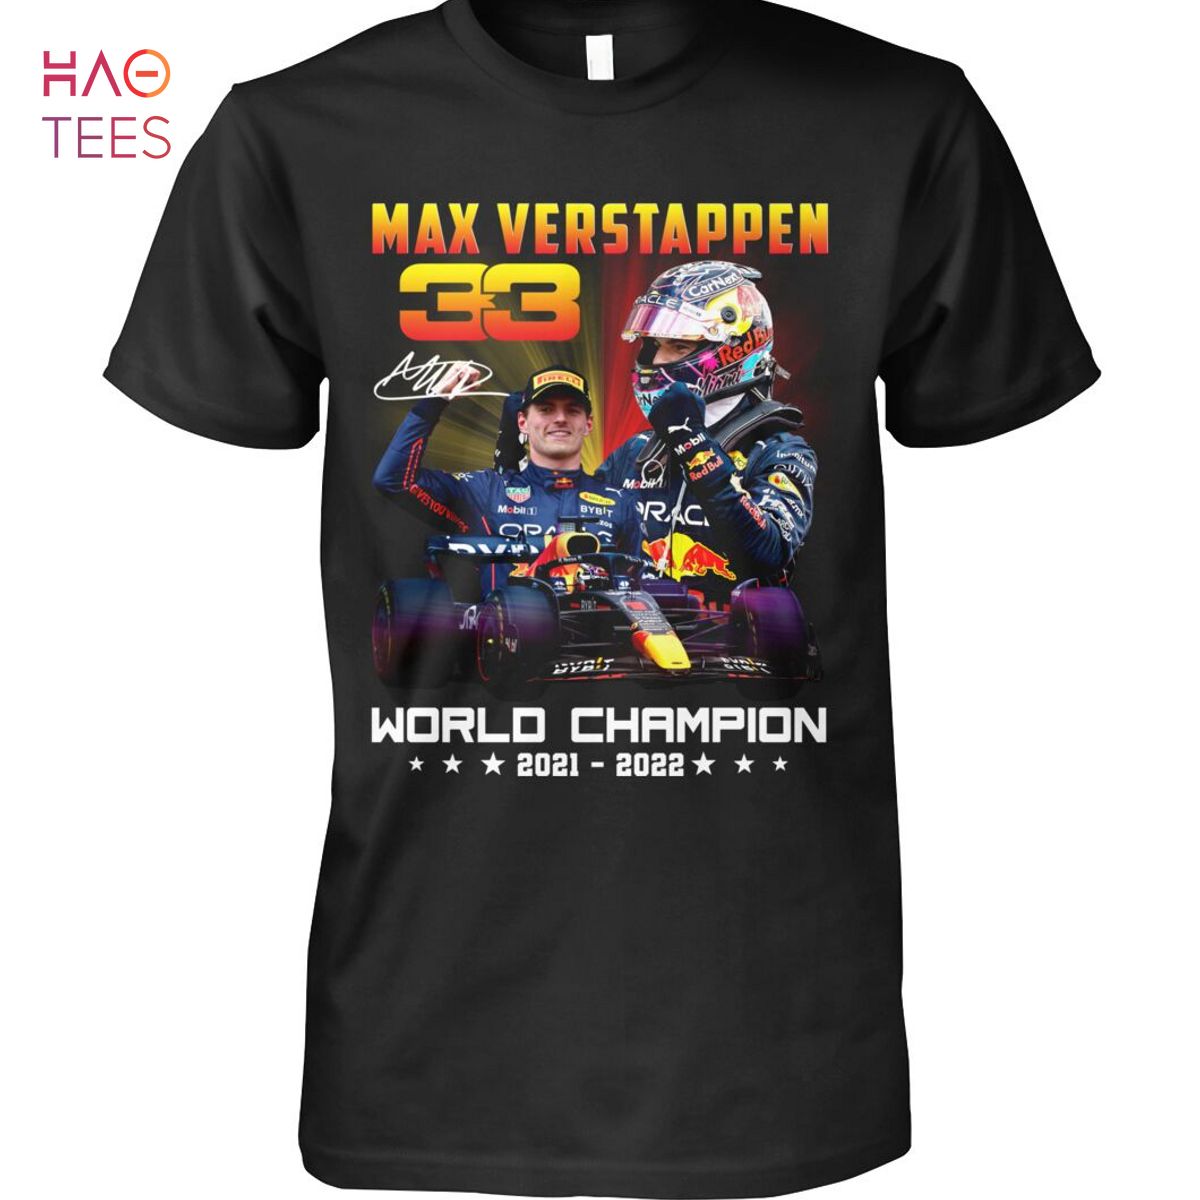 Max Verstappen 33 World Champion 2021 2022 T Shirt